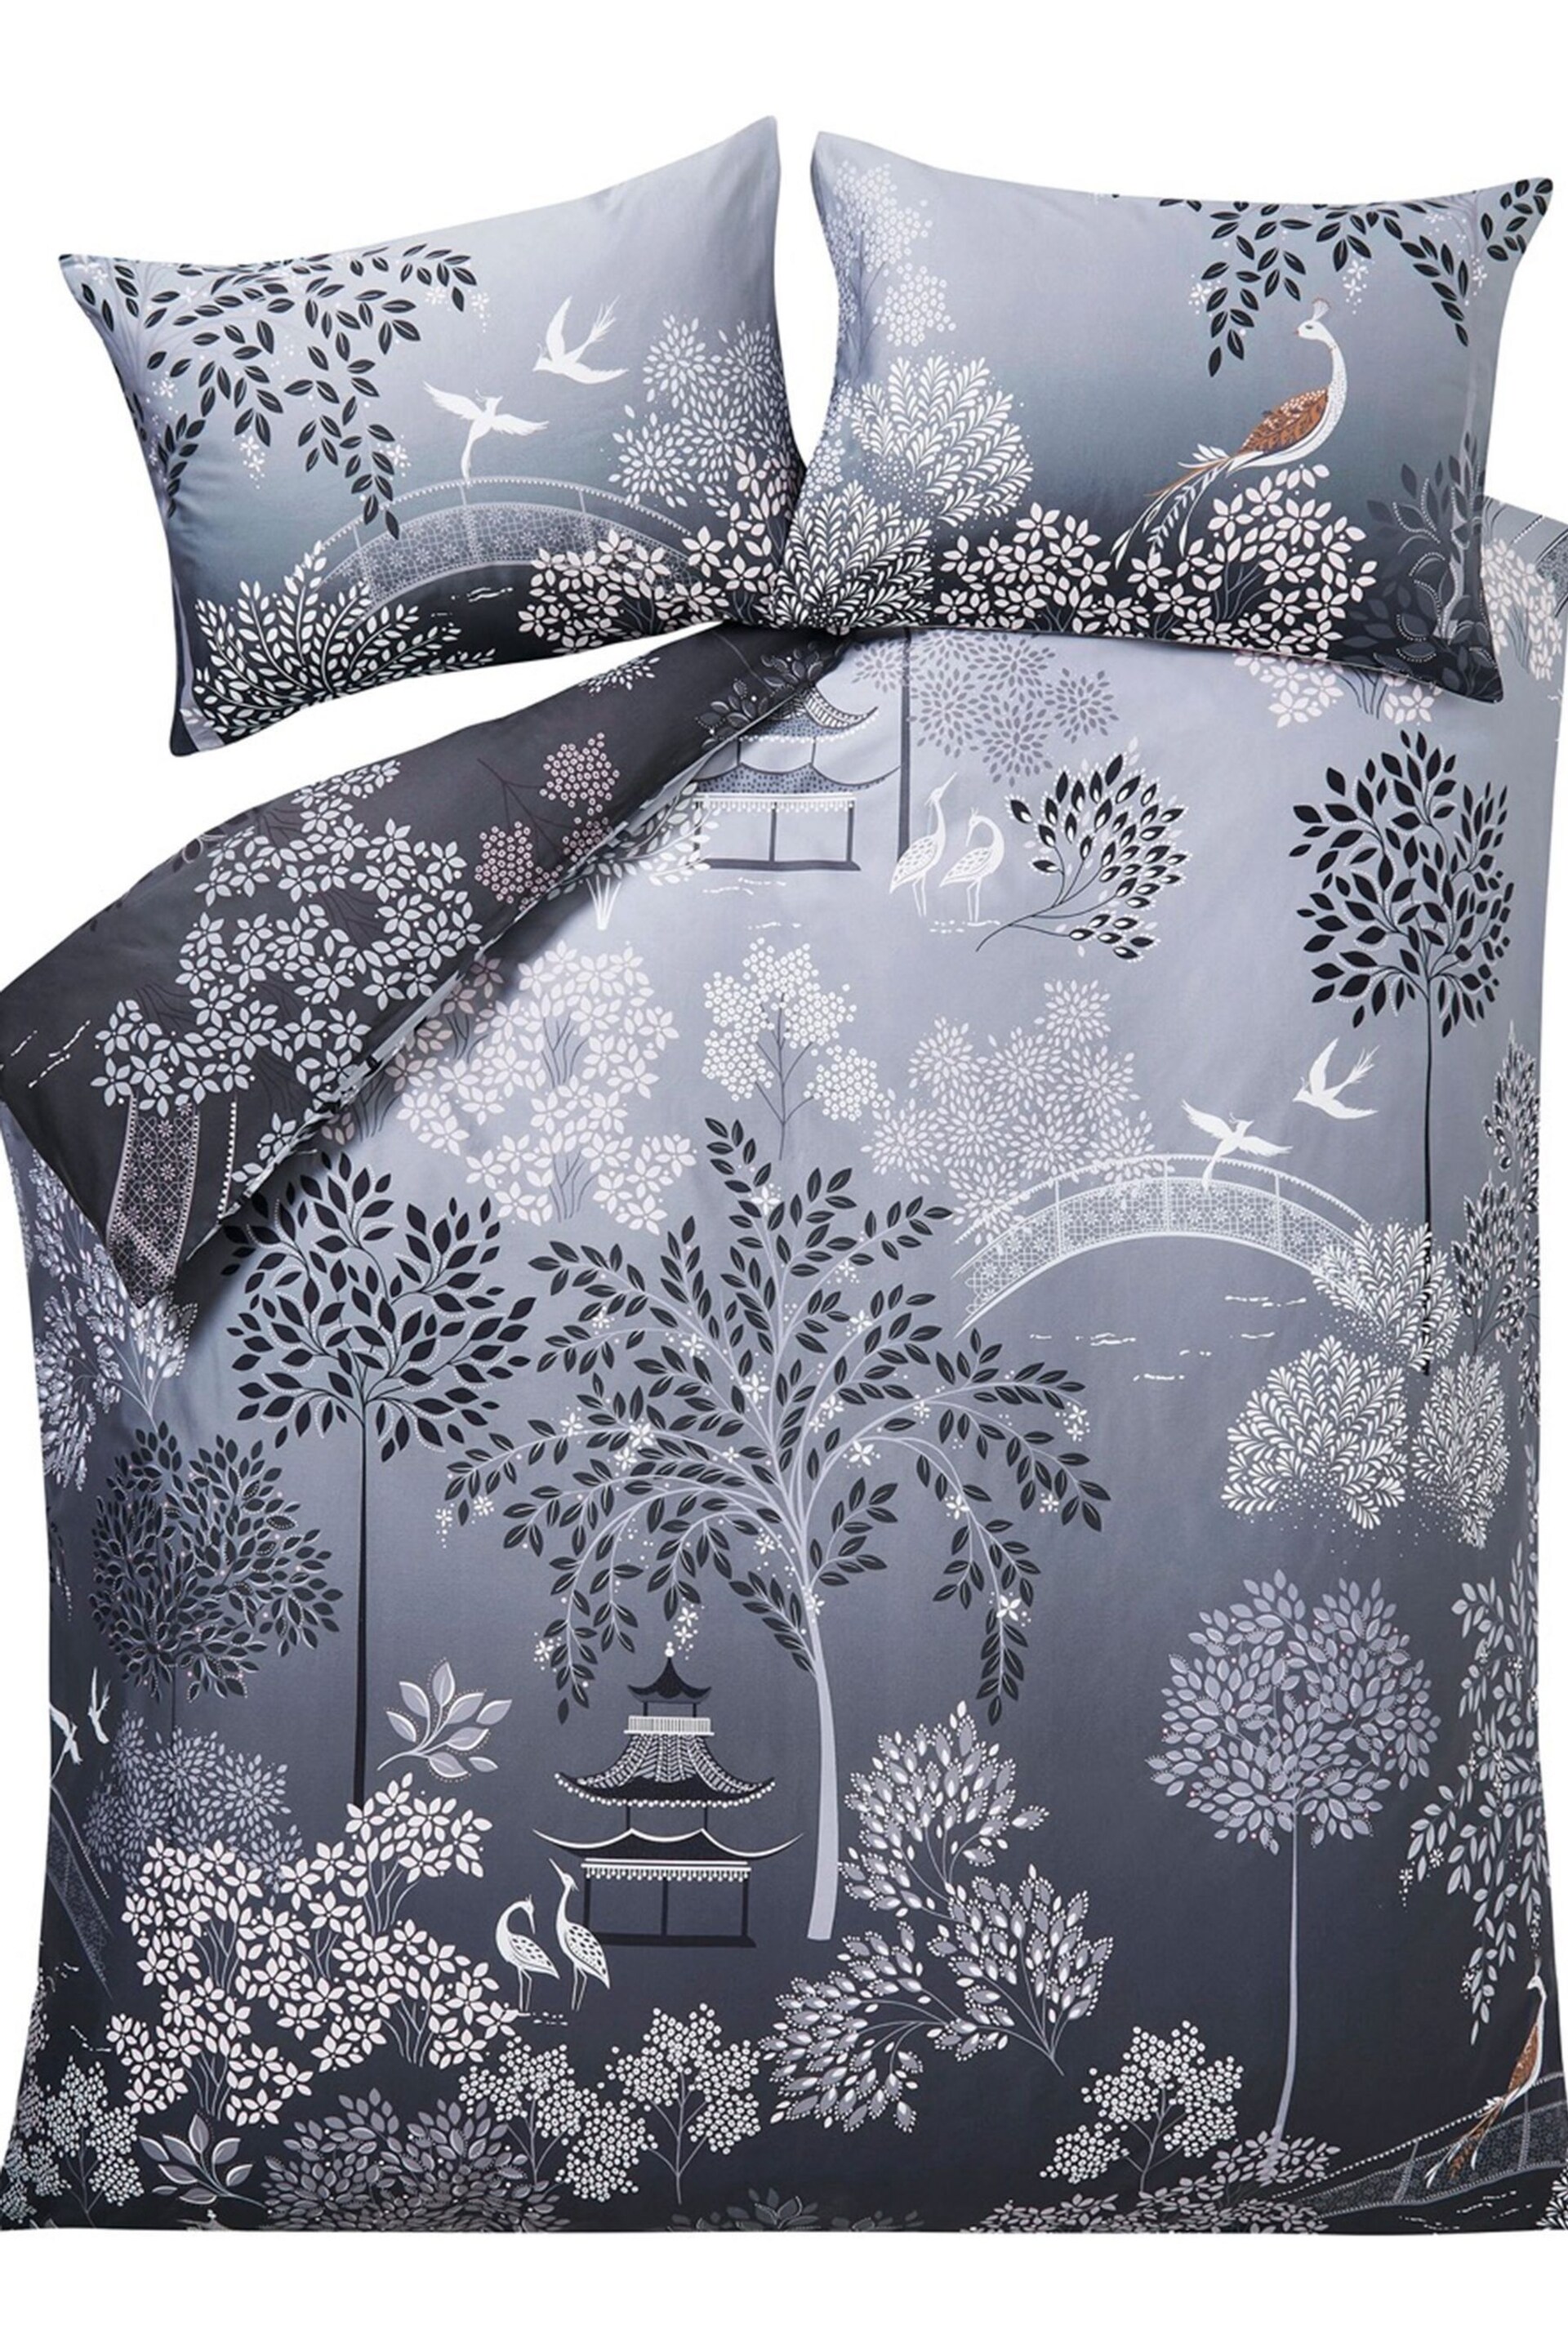 Sara Miller Blush Grey Pagoda Garden Duvet Cover and Pillowcase Set - Image 7 of 9